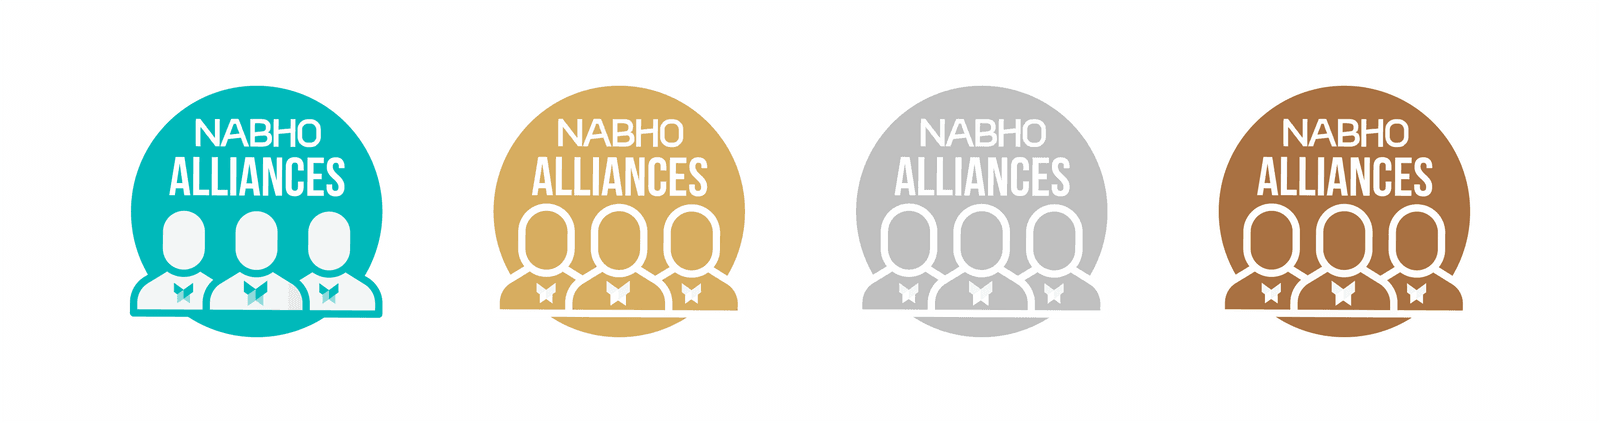 Alliances Partnership logos 